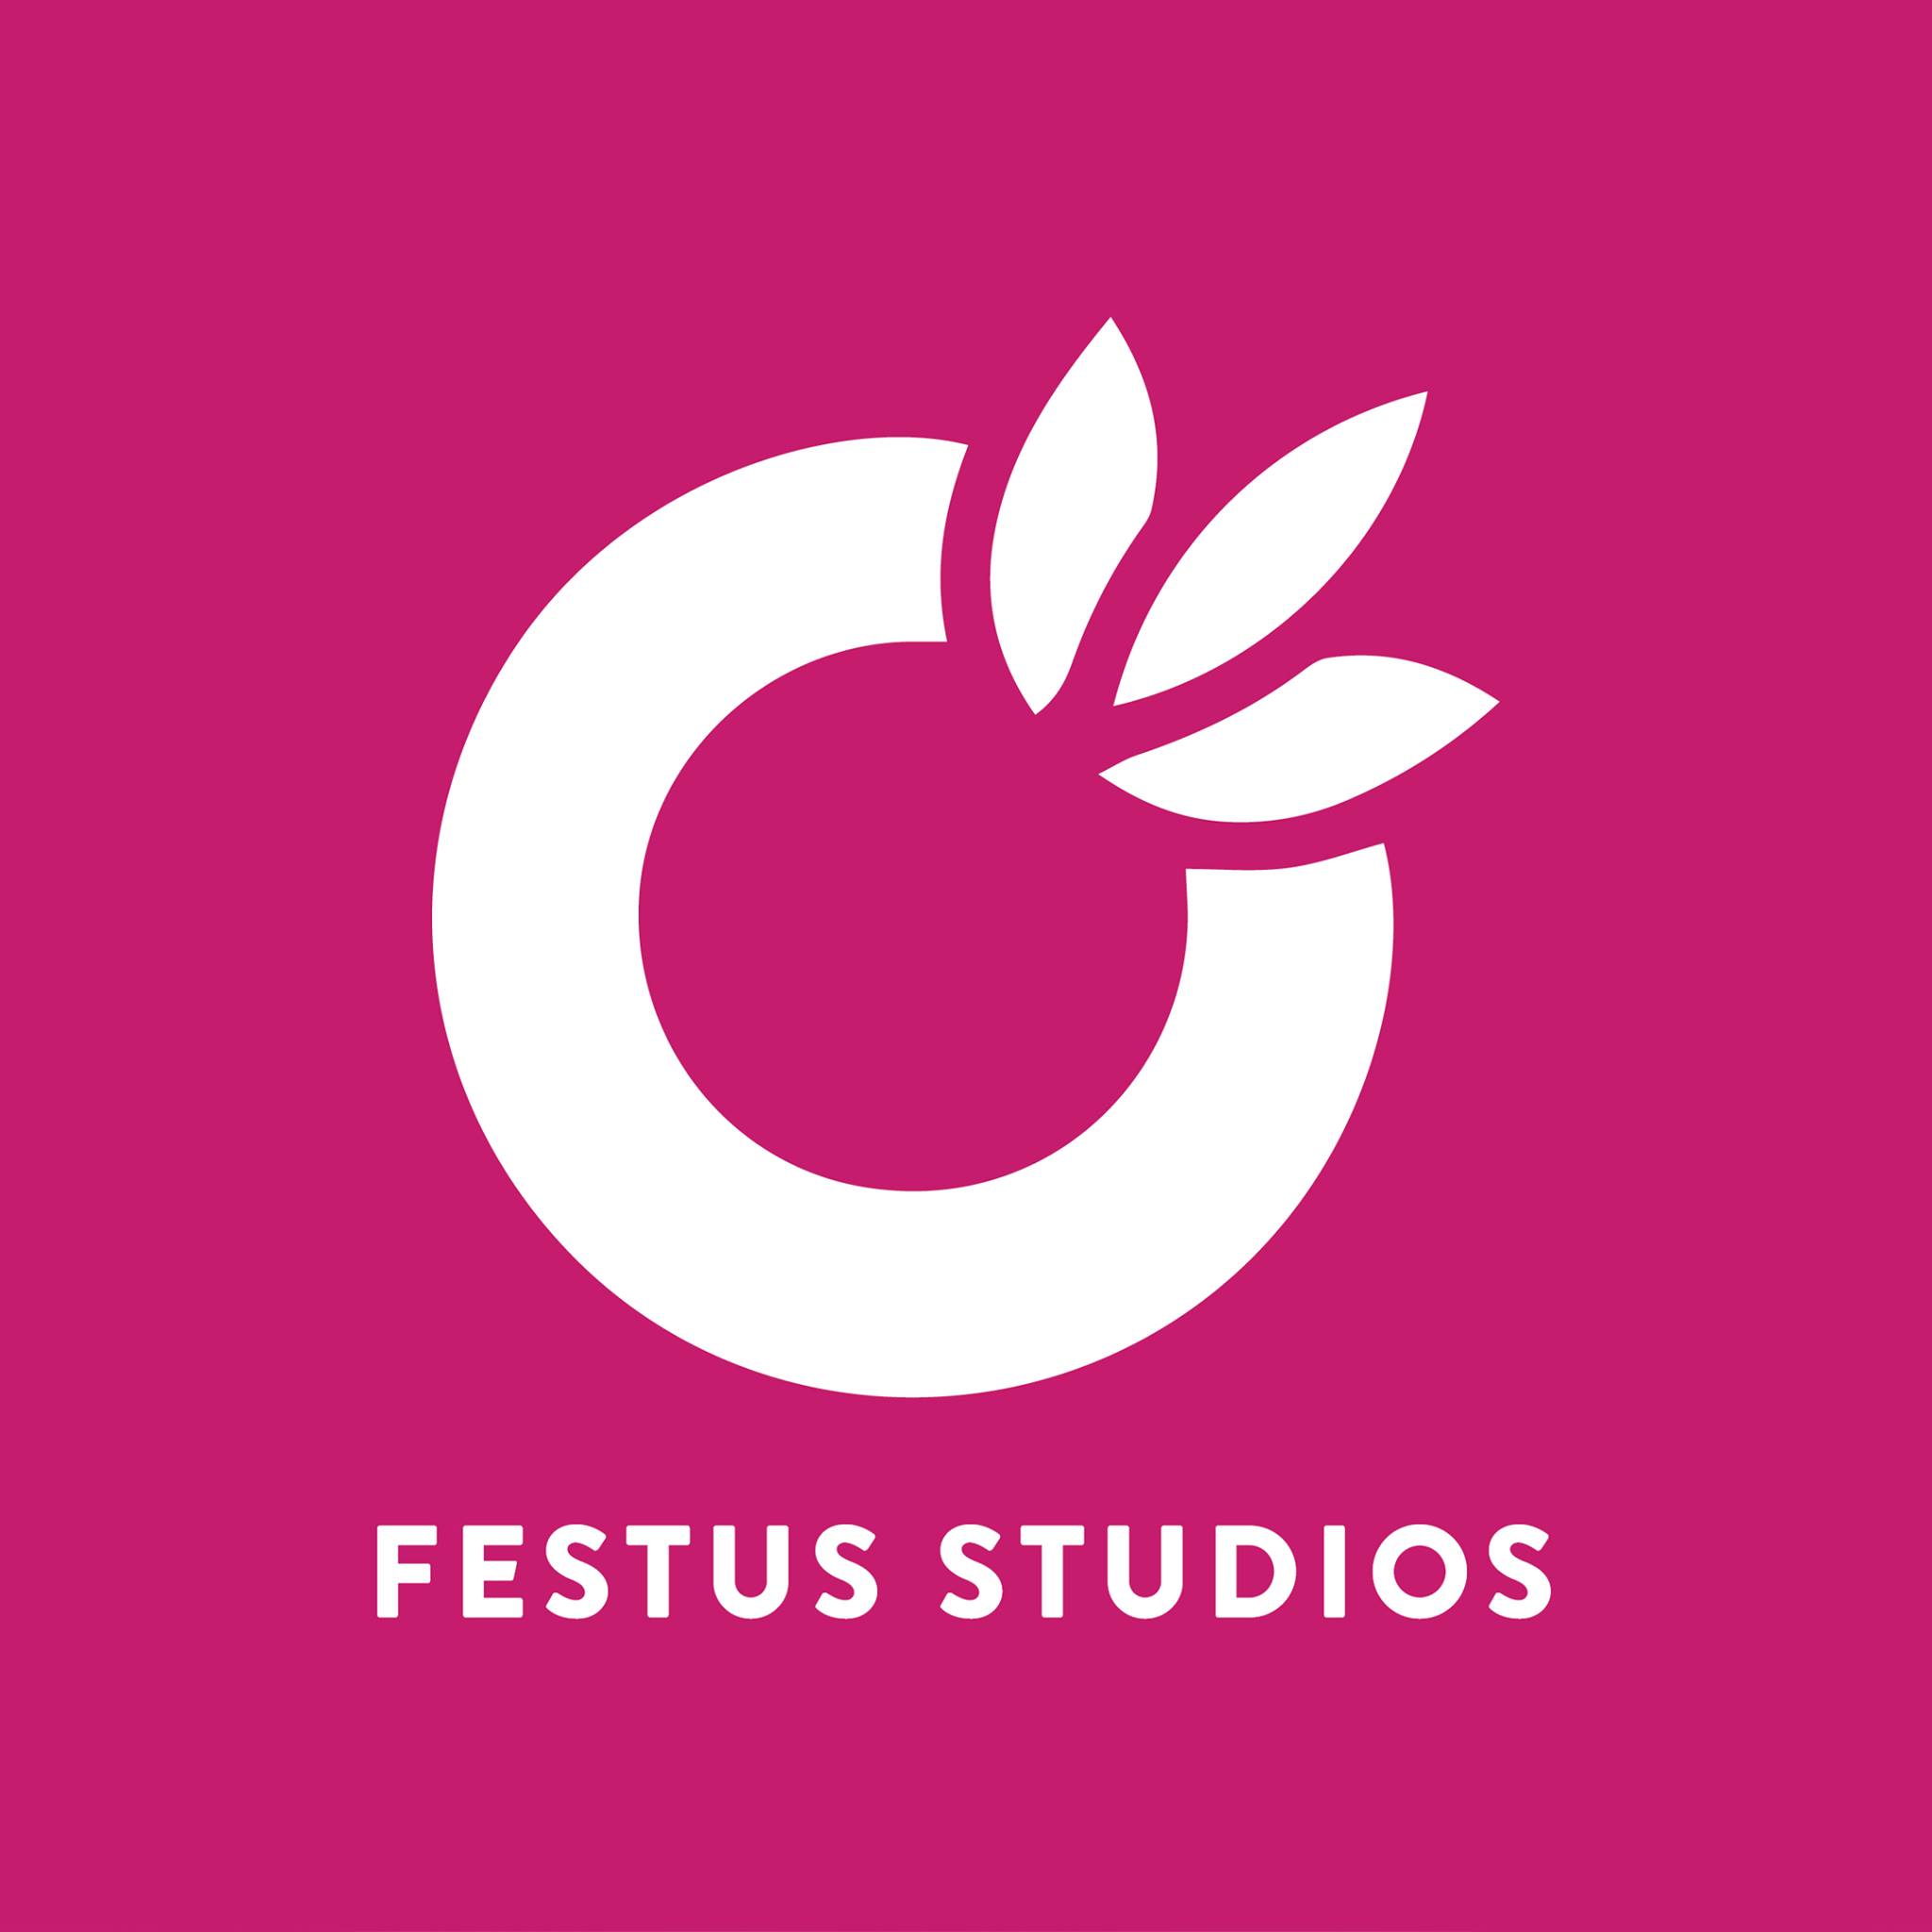 Festus Studios|Catering Services|Event Services